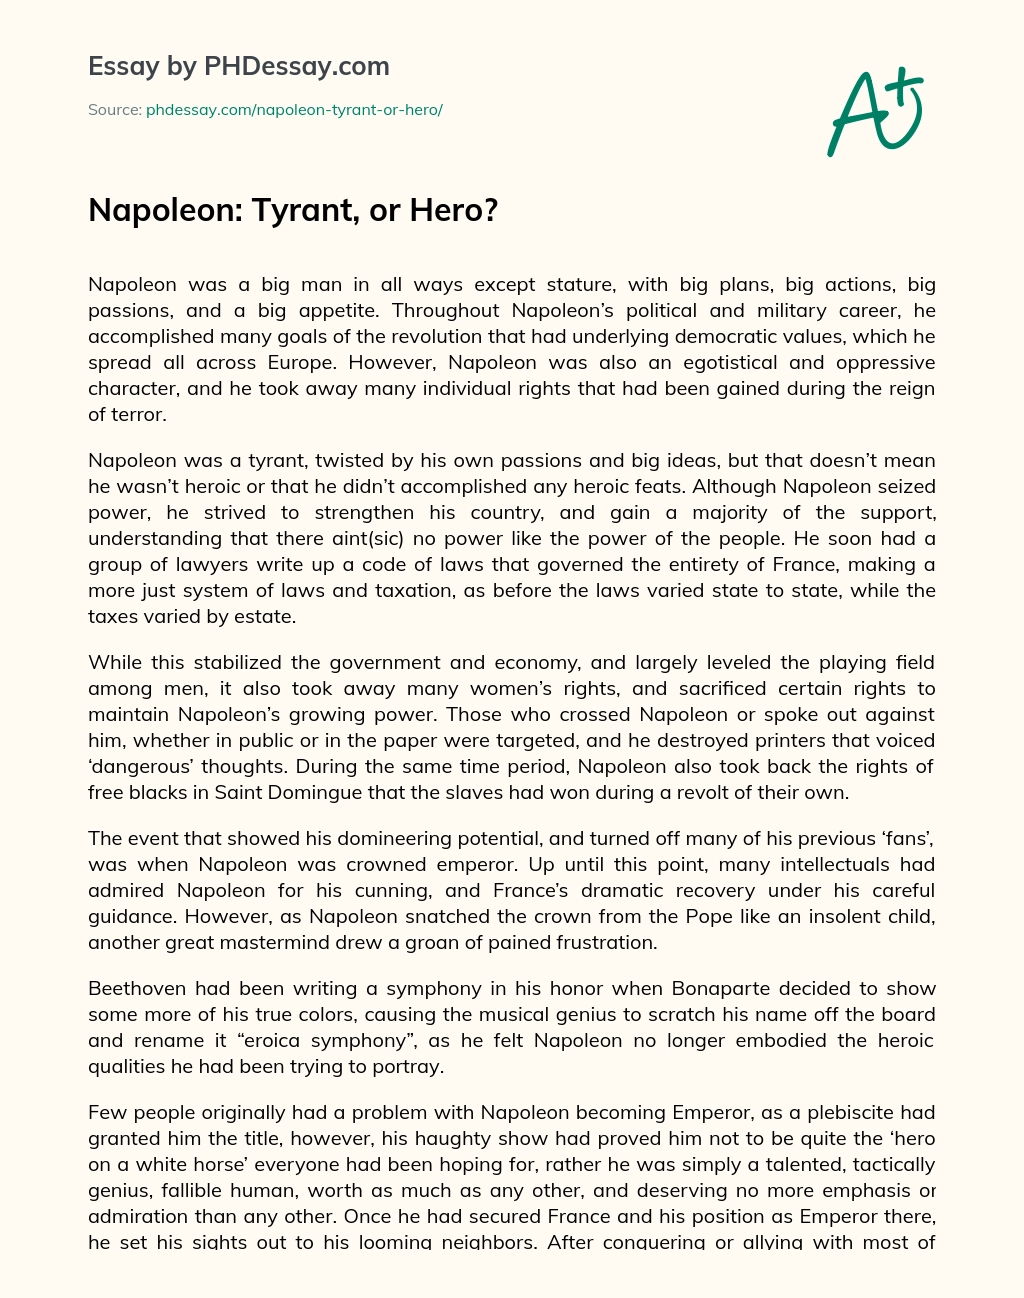 Napoleon: Tyrant, or Hero? essay